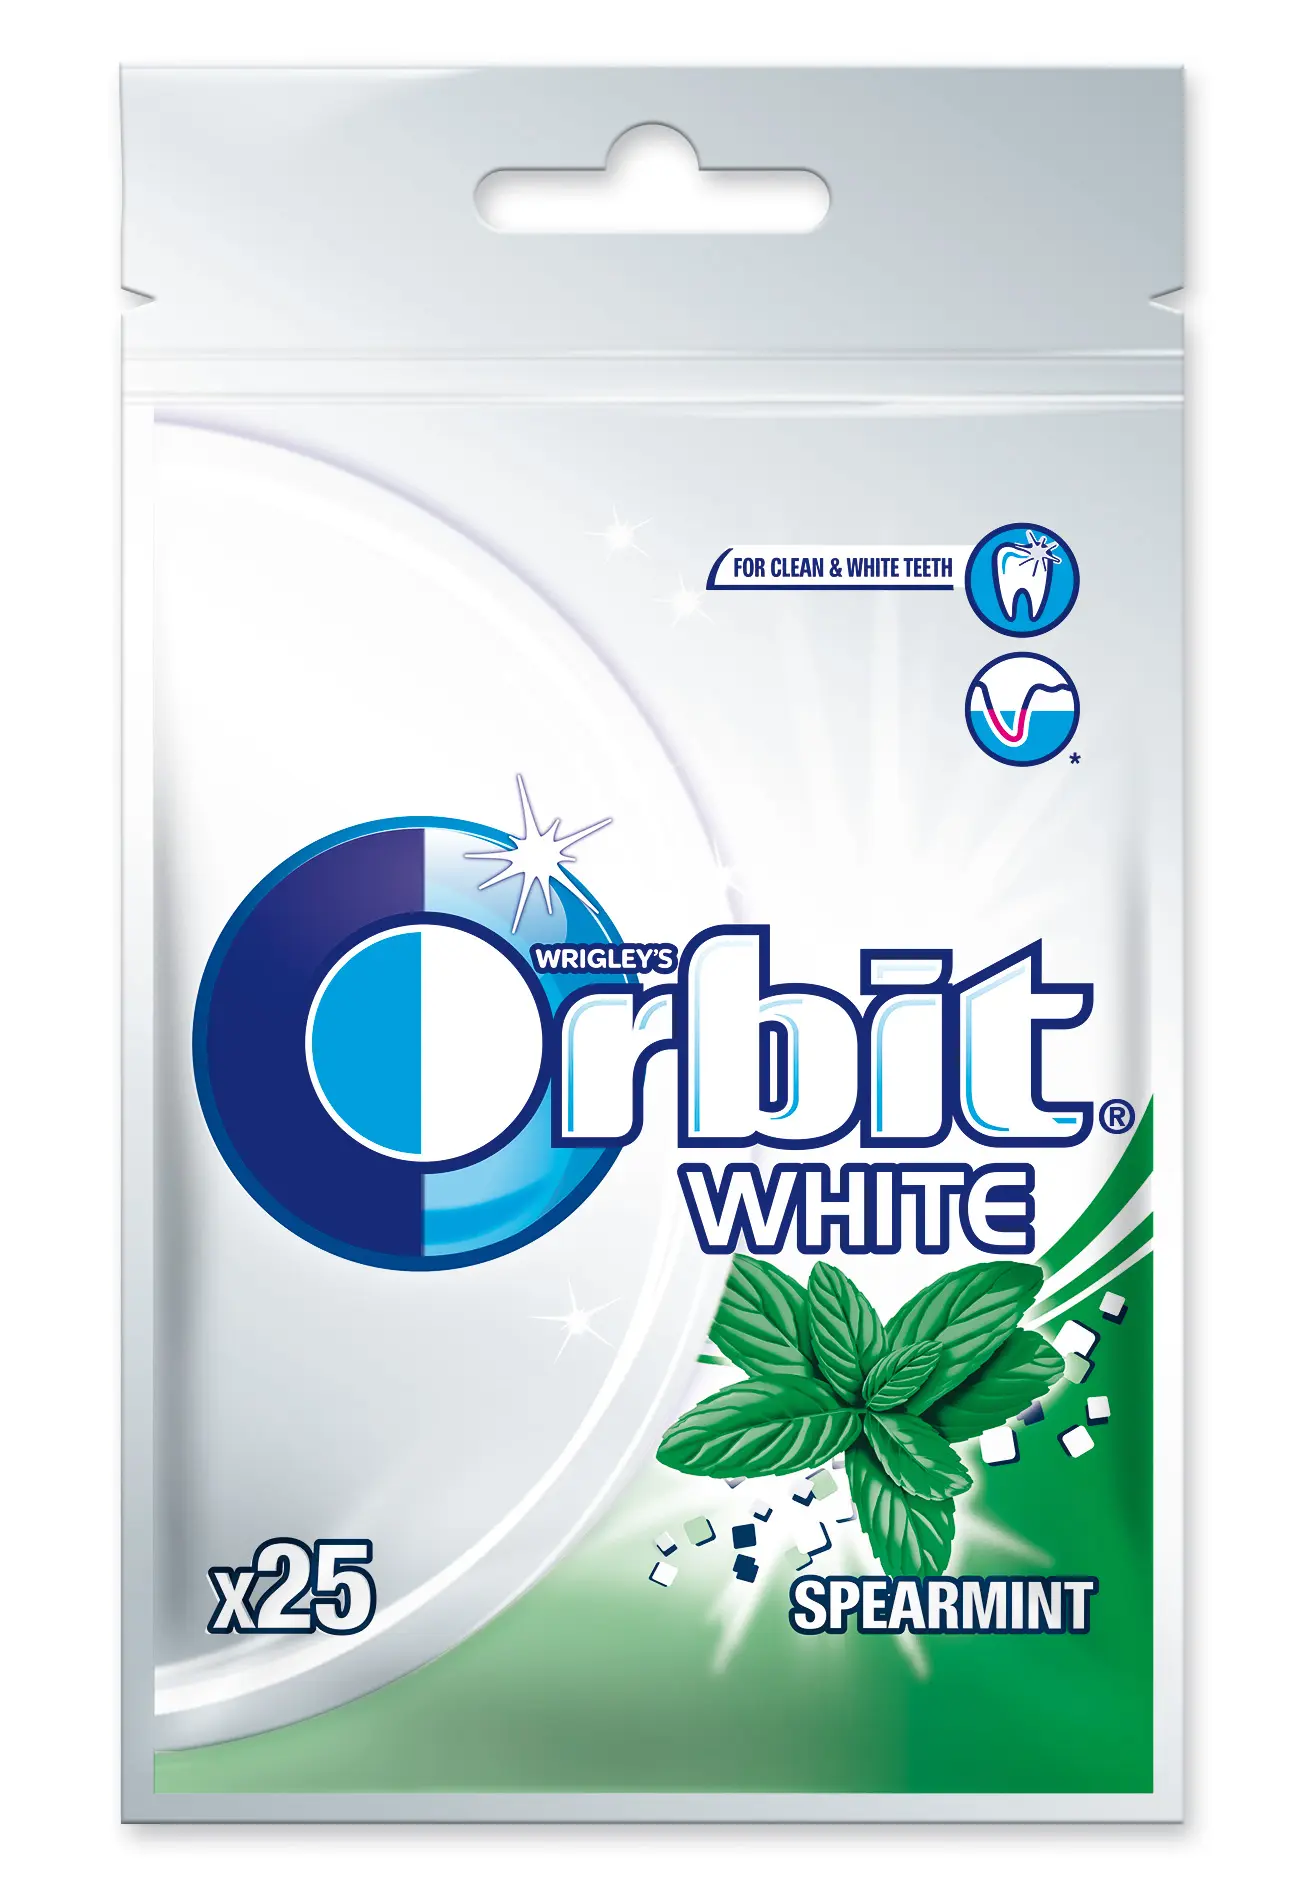 Guma Orbit Spearmint White torba